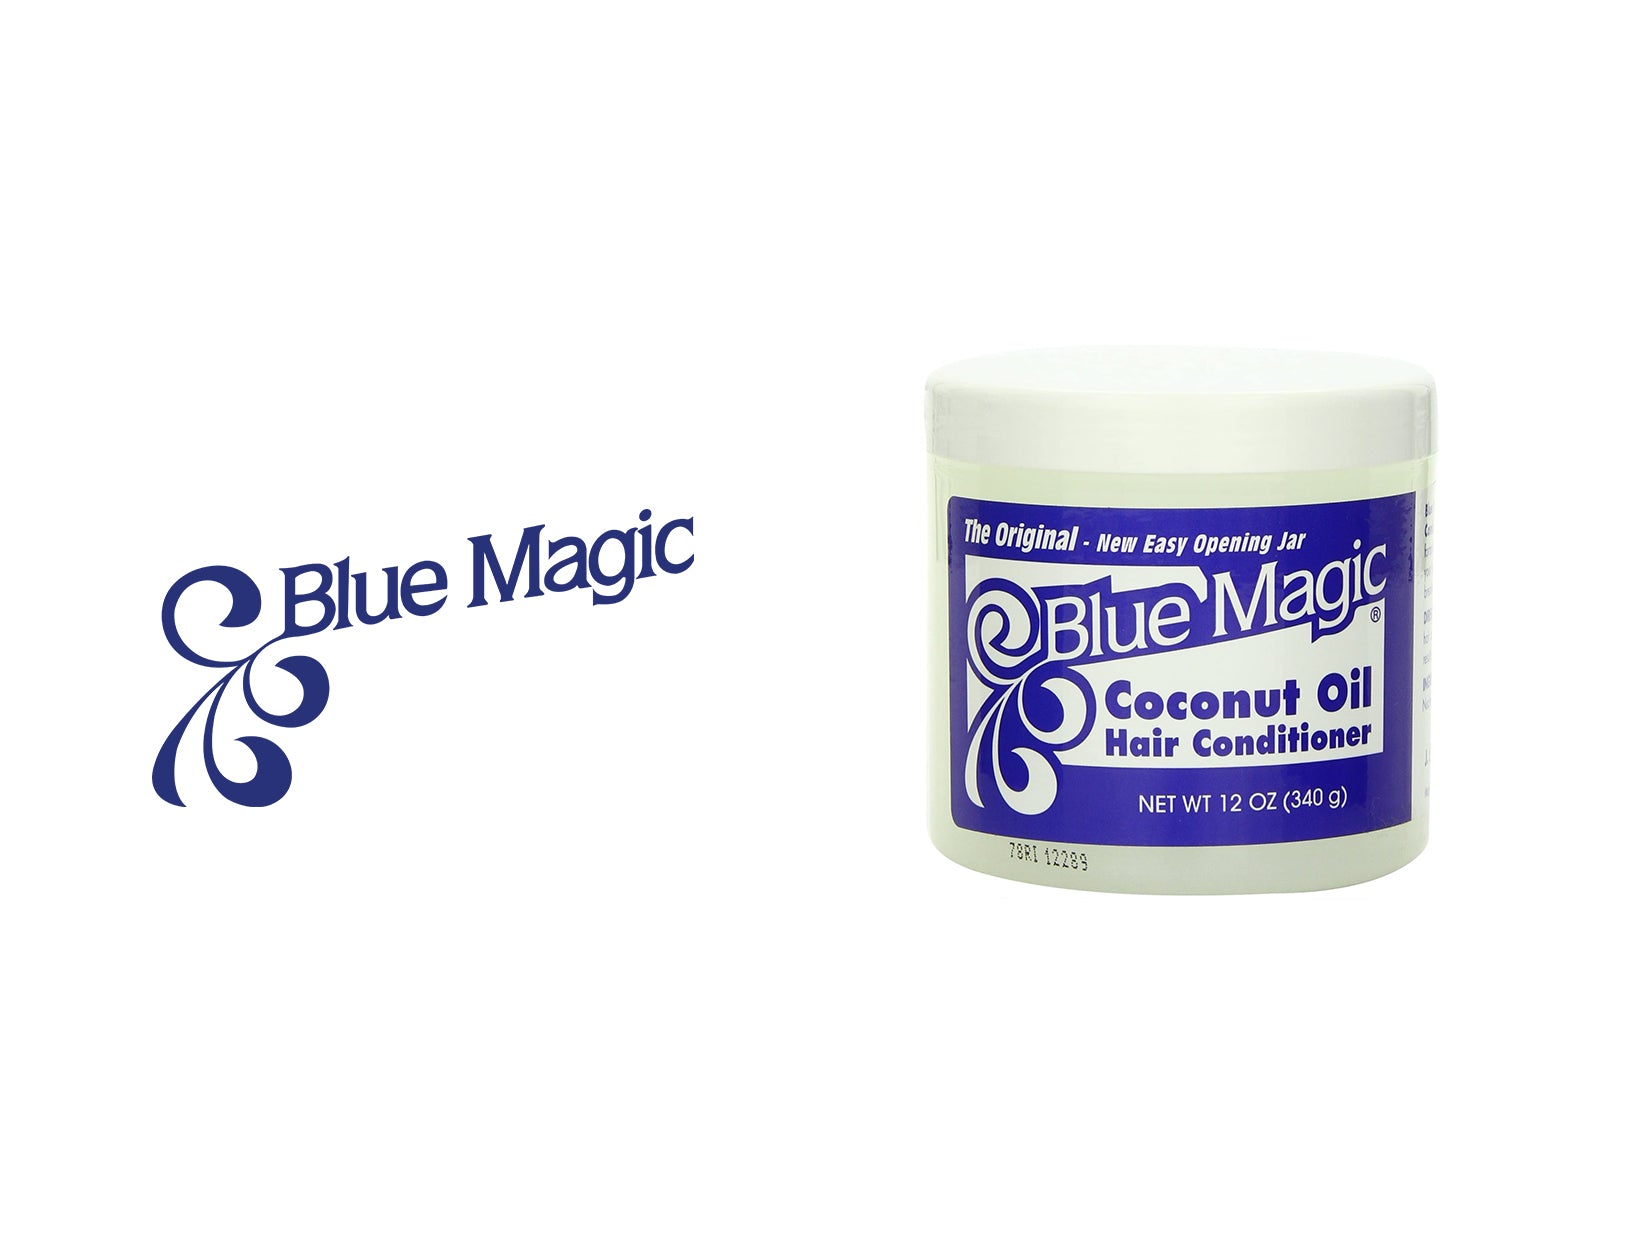 2. Blue Magic Hair Conditioner - wide 7